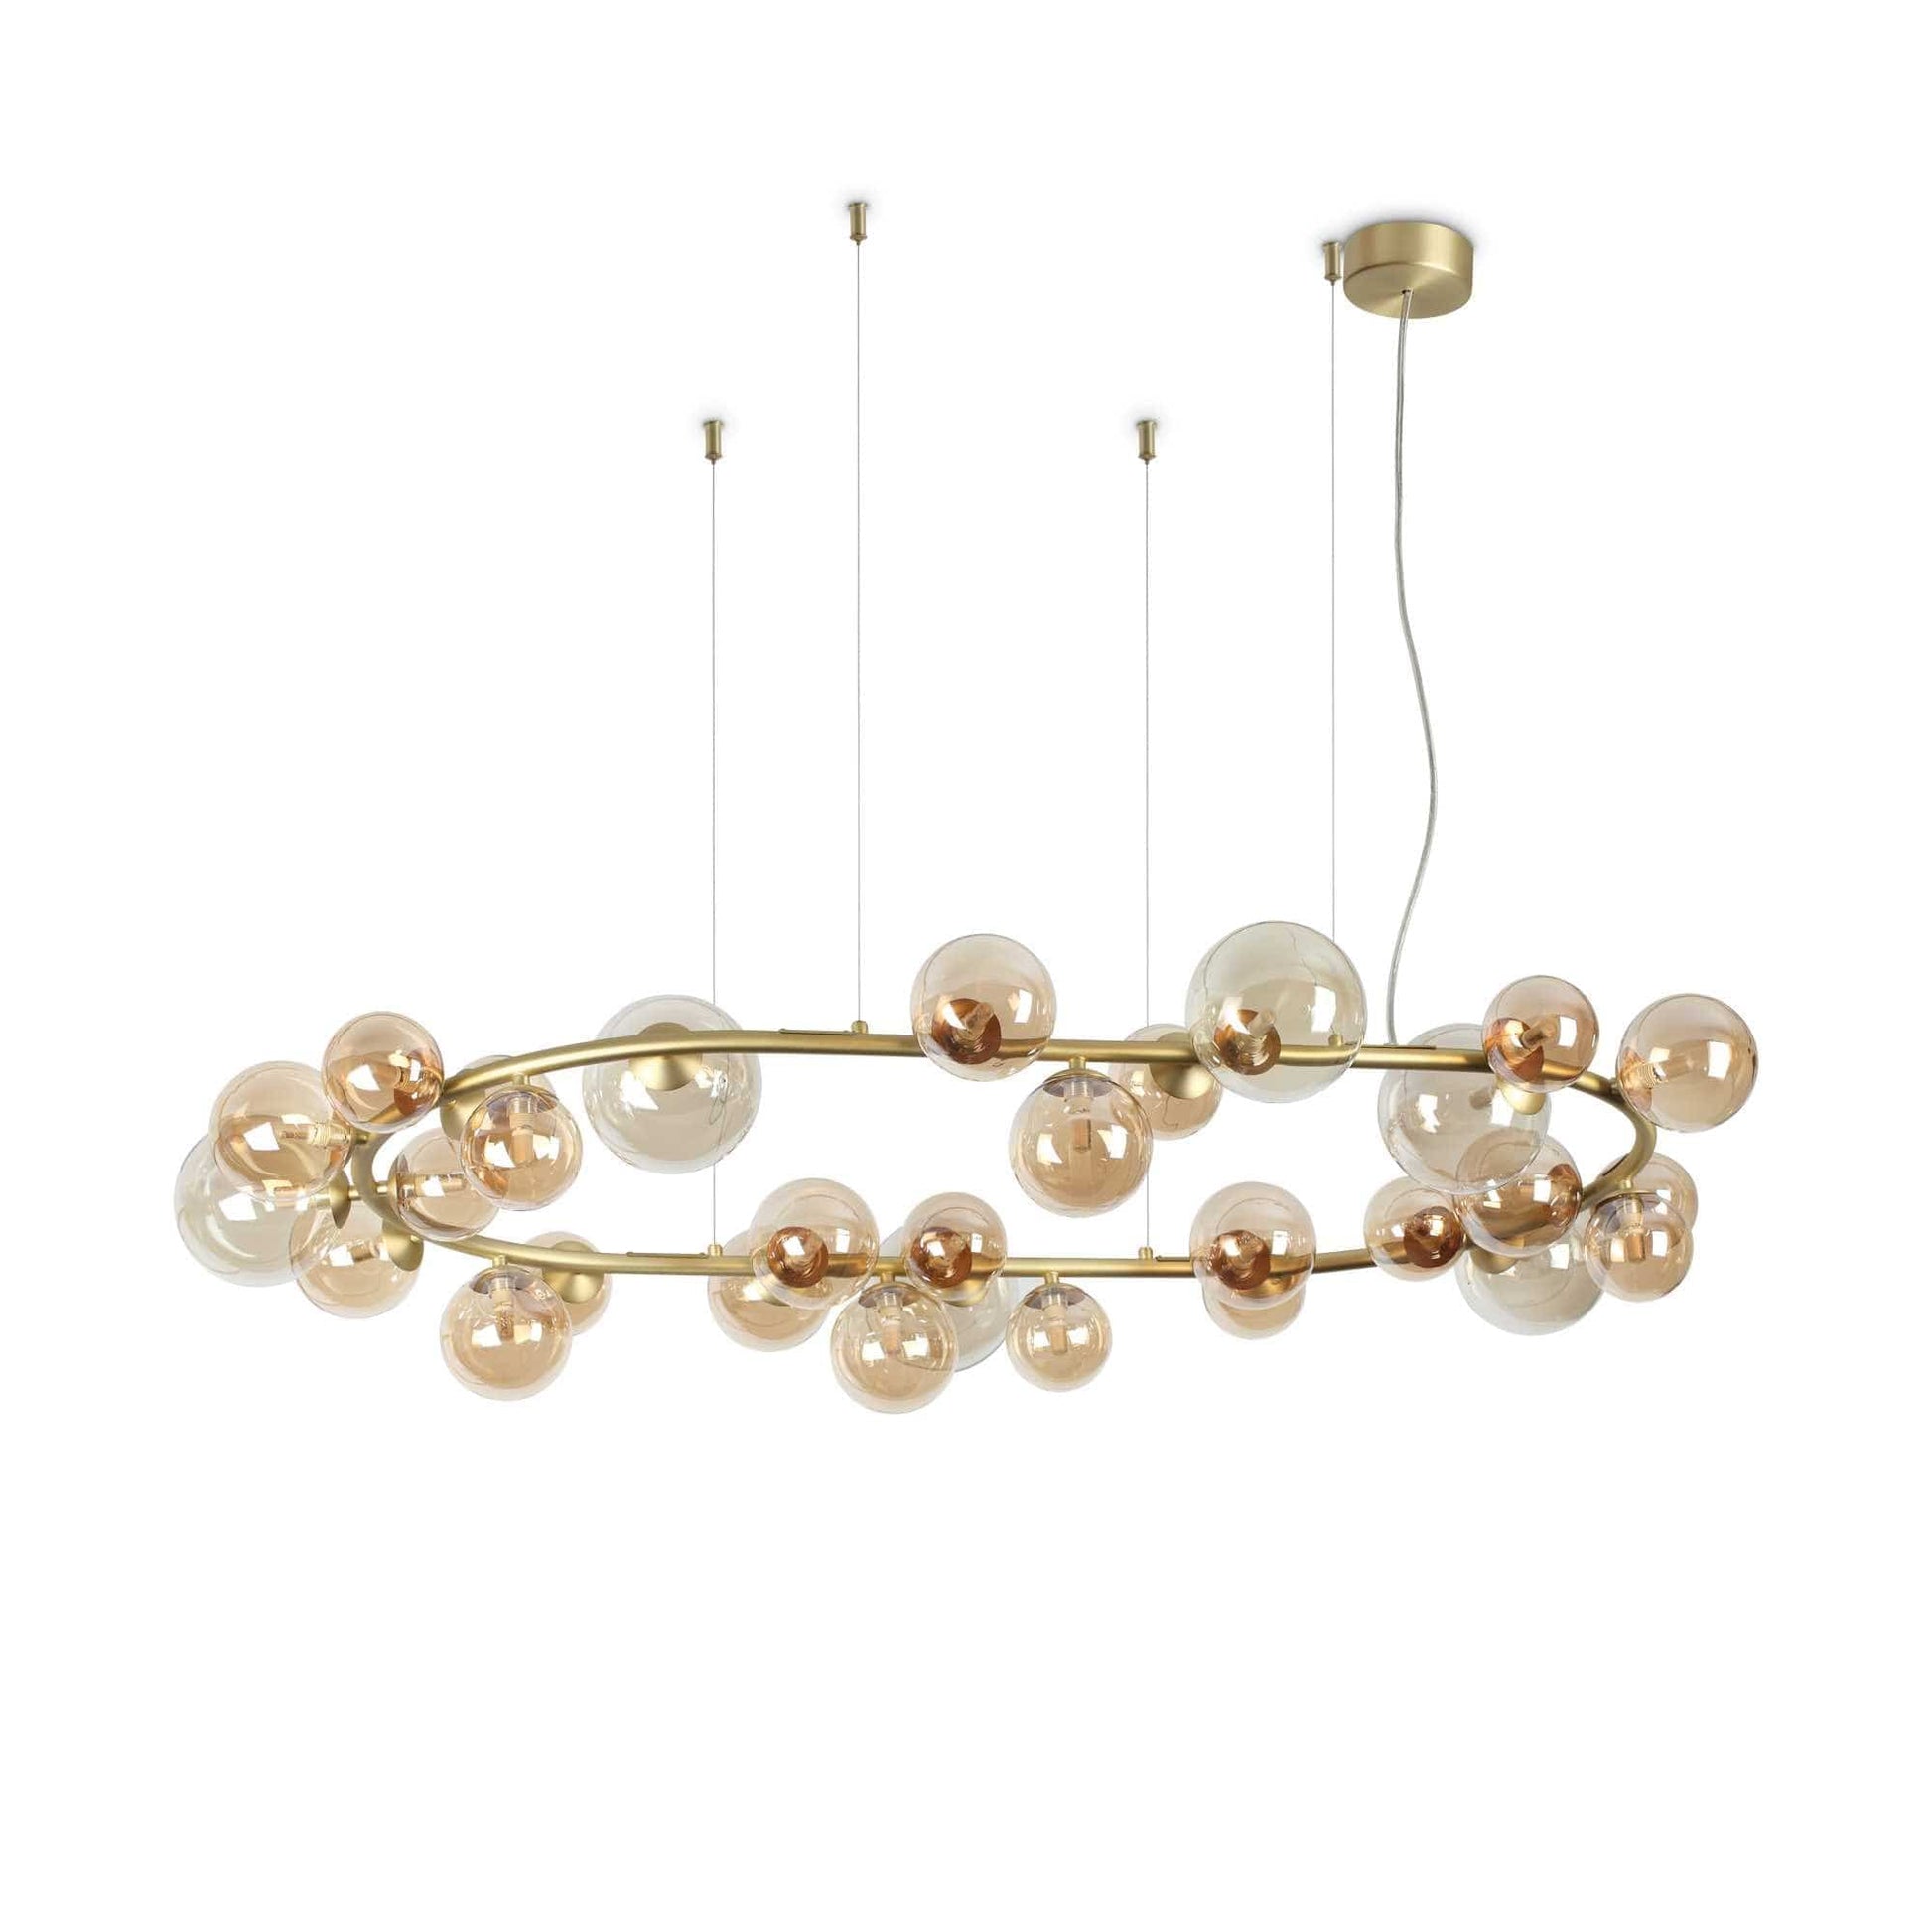 Ideal Lux Lighting Pendant lights Satin brass with amber glass Perlage SP30 Pendant Light